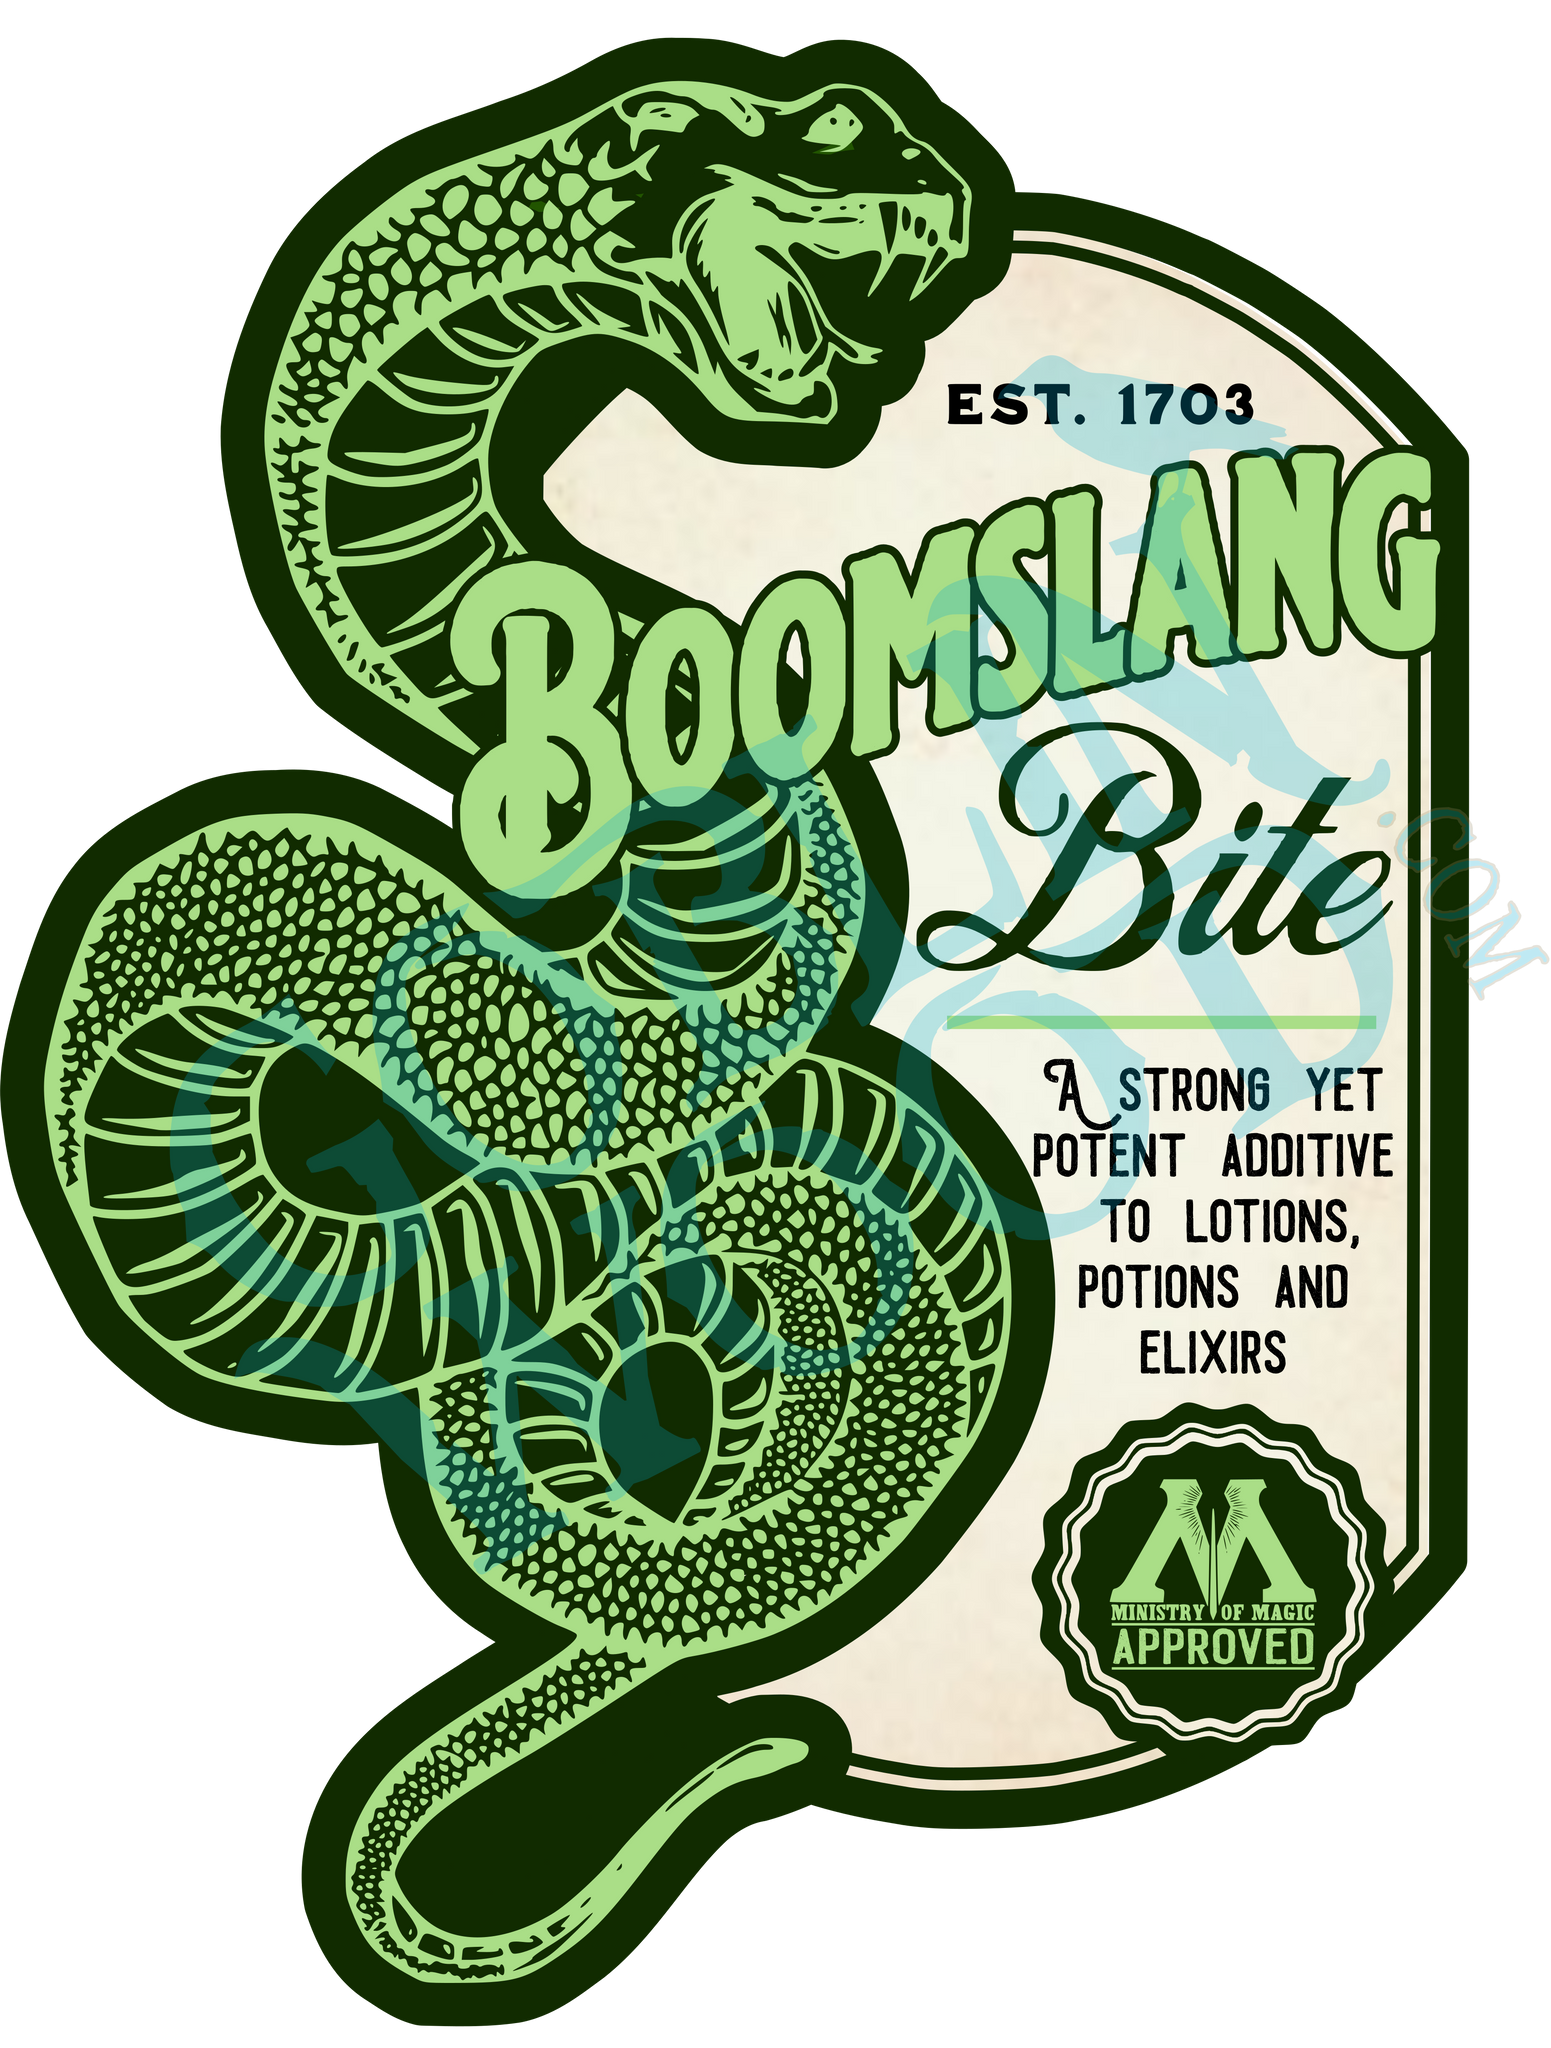 Boomslang Bite - Harry Potter Inspired